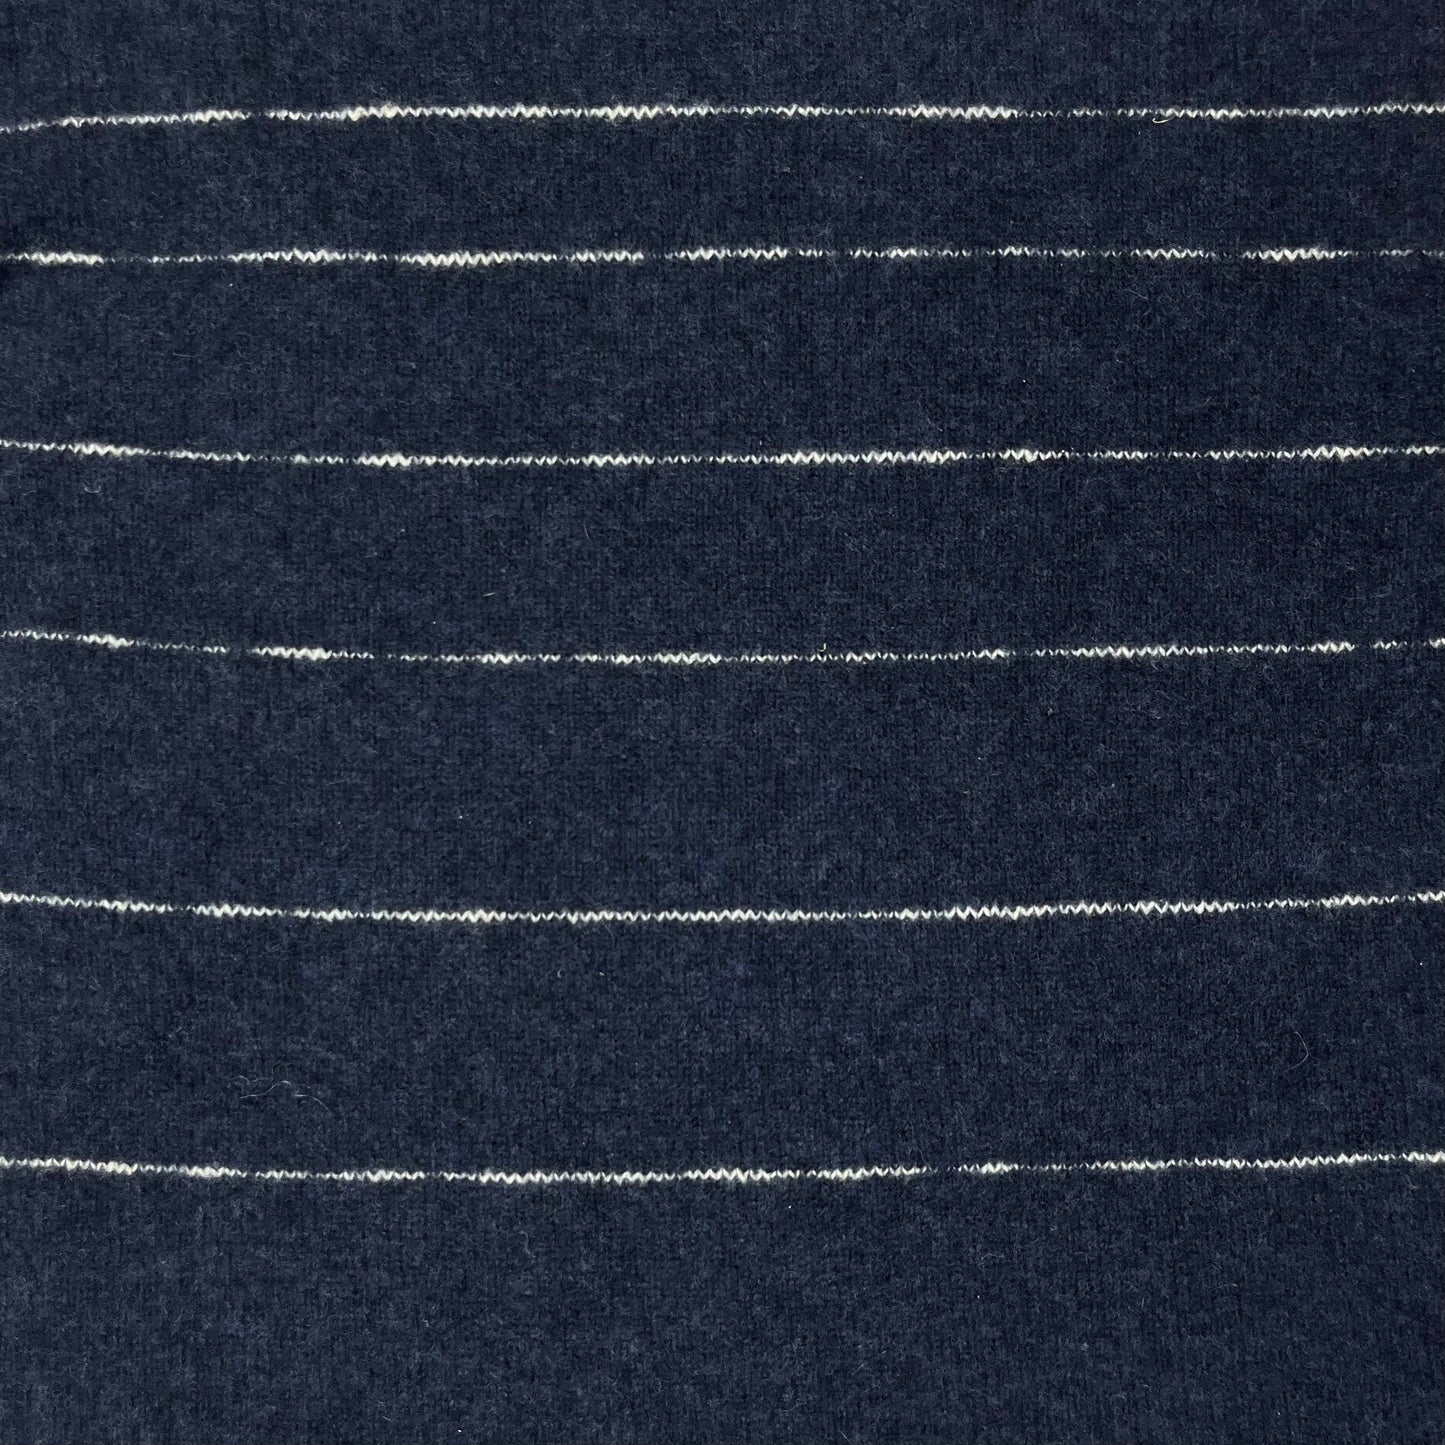 Dries Van Noten Striped Wool Sweater